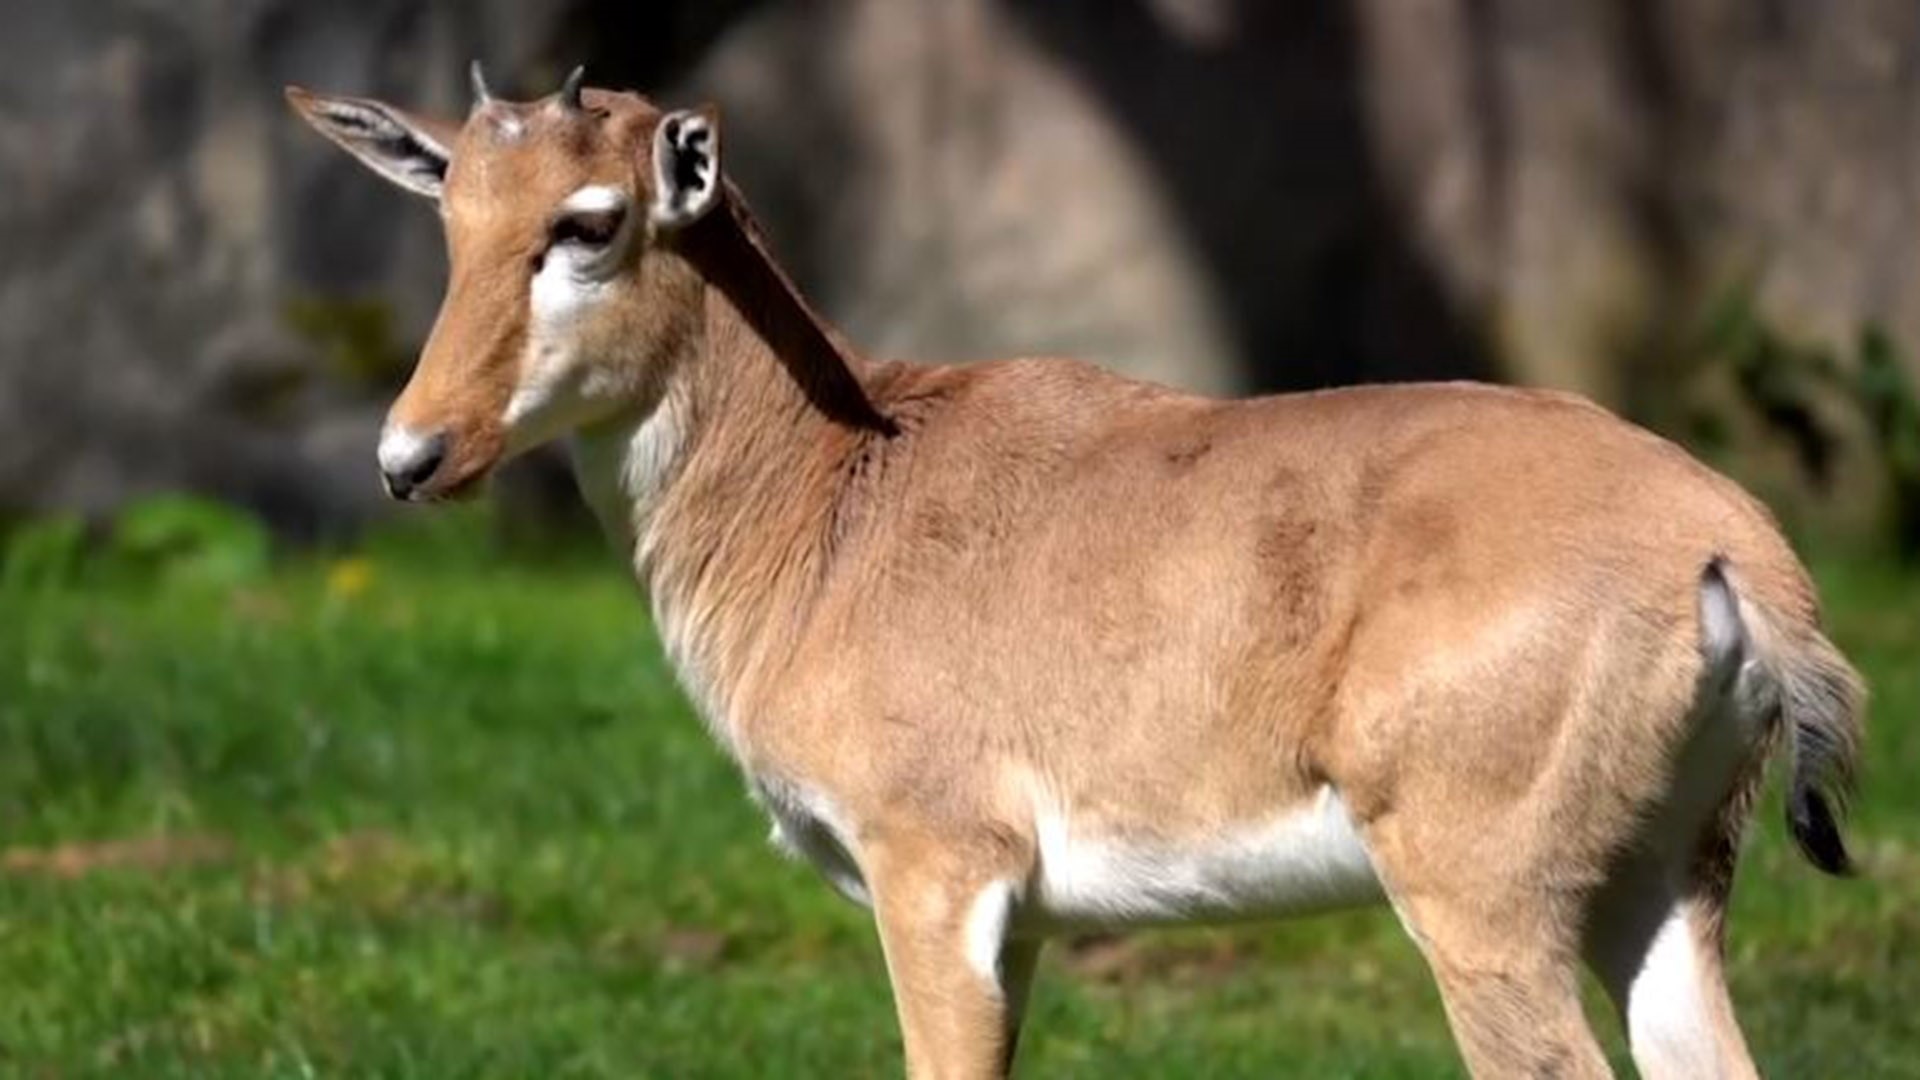 A rare African bontebok antelope calf born on February 2 made her public debut at Oregon Zoo on Thursday.